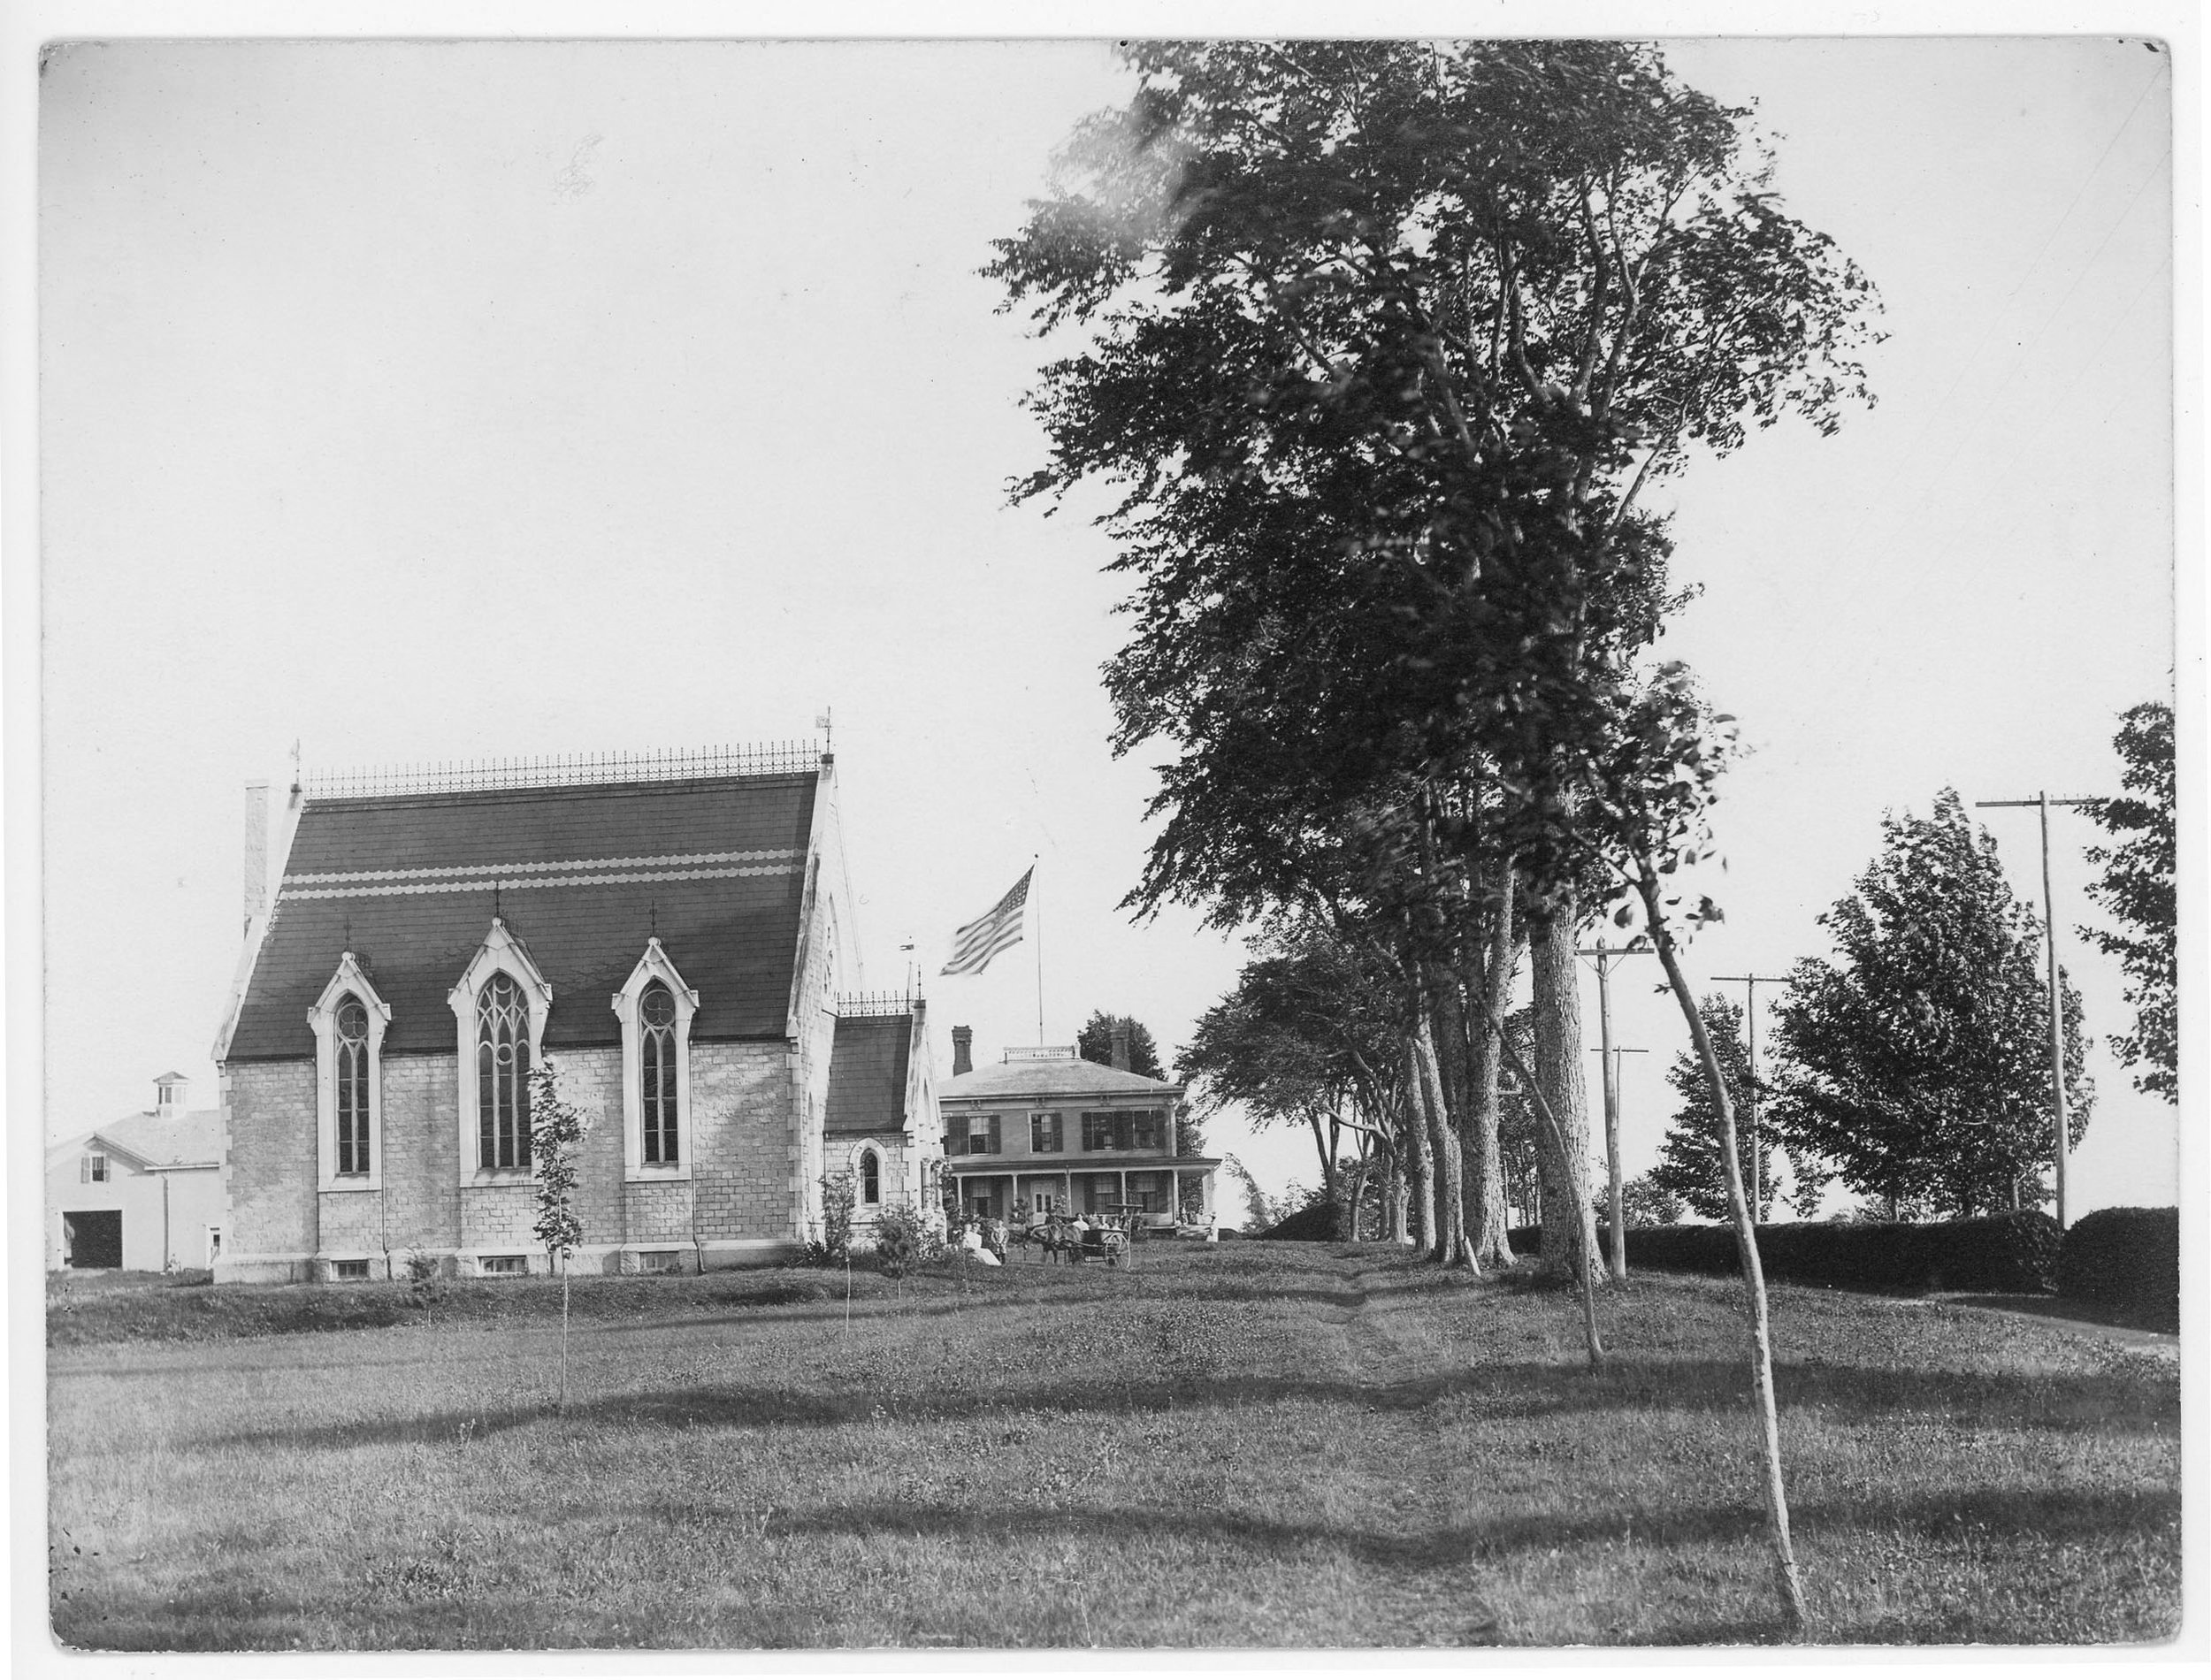 Washburn Memorial Library circa 1900, photo courtesy of Norland Living History Center